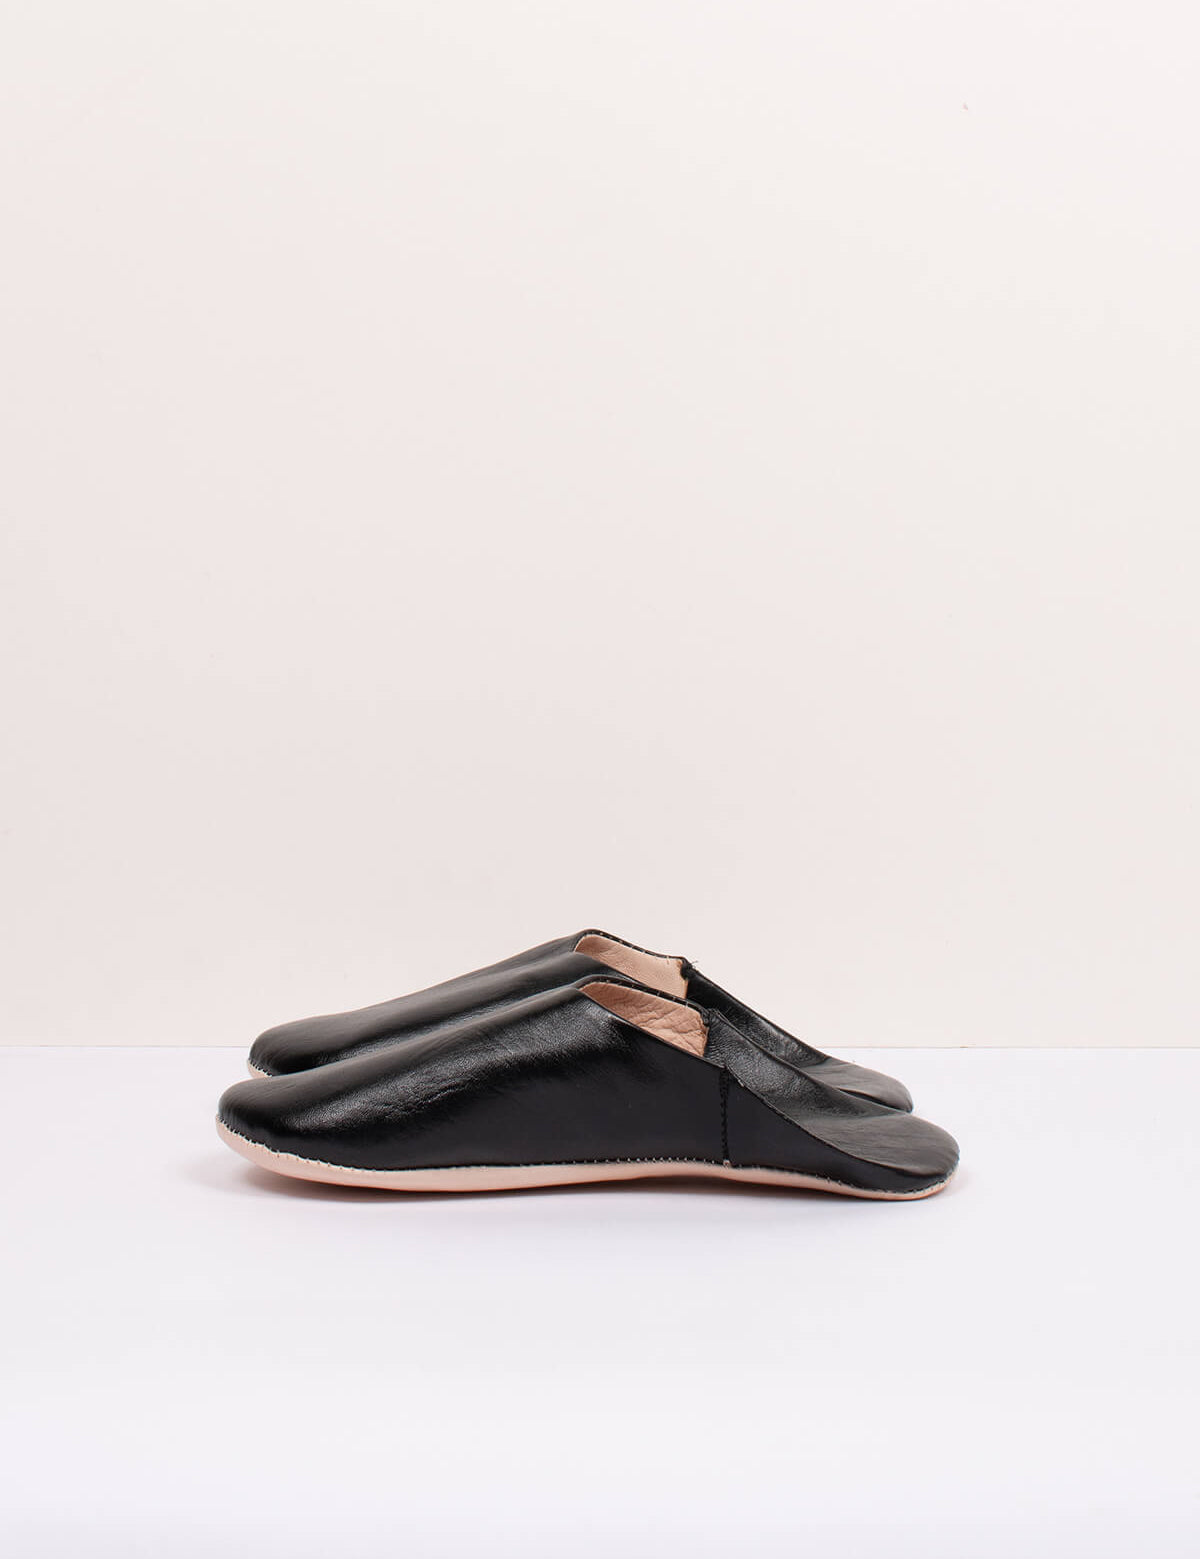 Bohemia-design-moroccan-babouche-slippers-leather-black.jpg